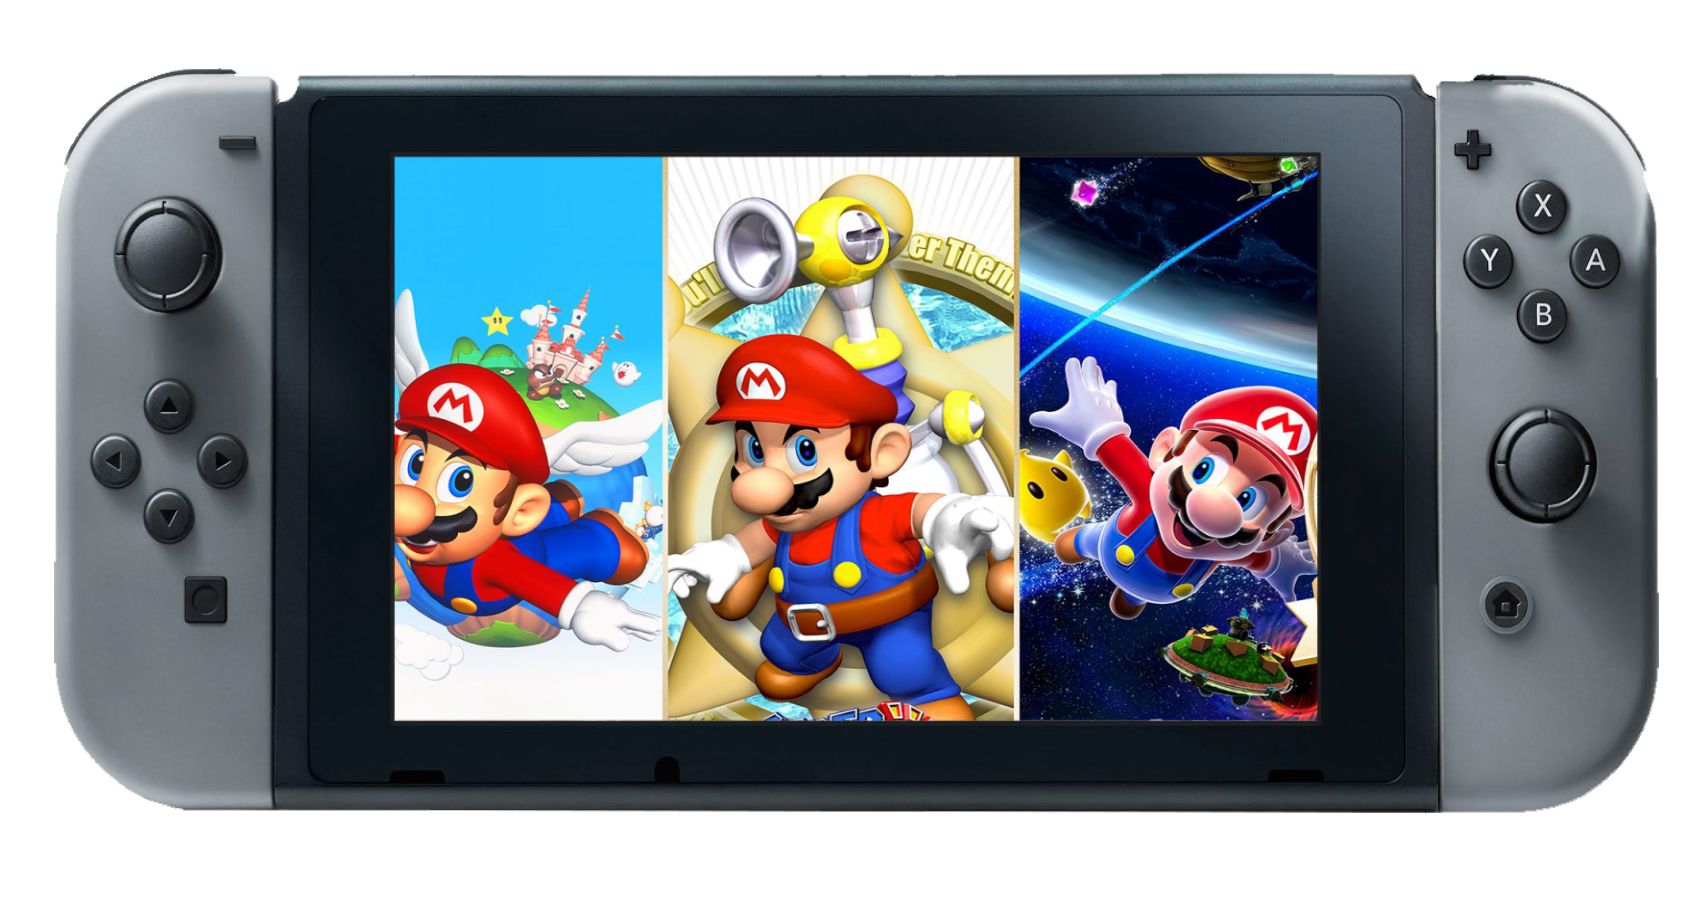 Nintendo Says It Won’t Make A Habit Of LimitedAvailability eShop Games